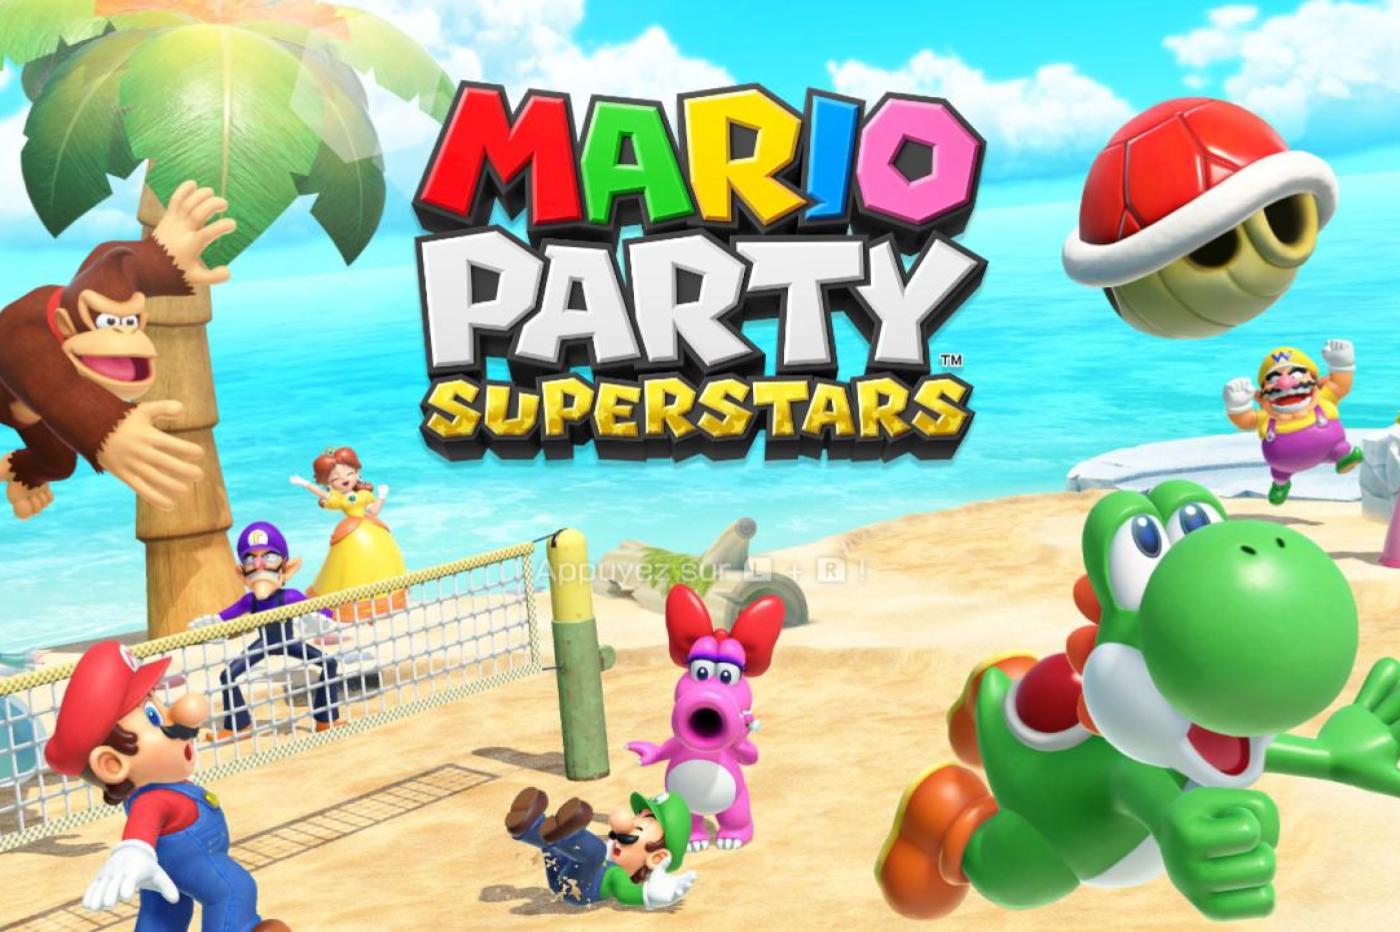 Jeu switch Mario Party Superstar - Nintendo Switch